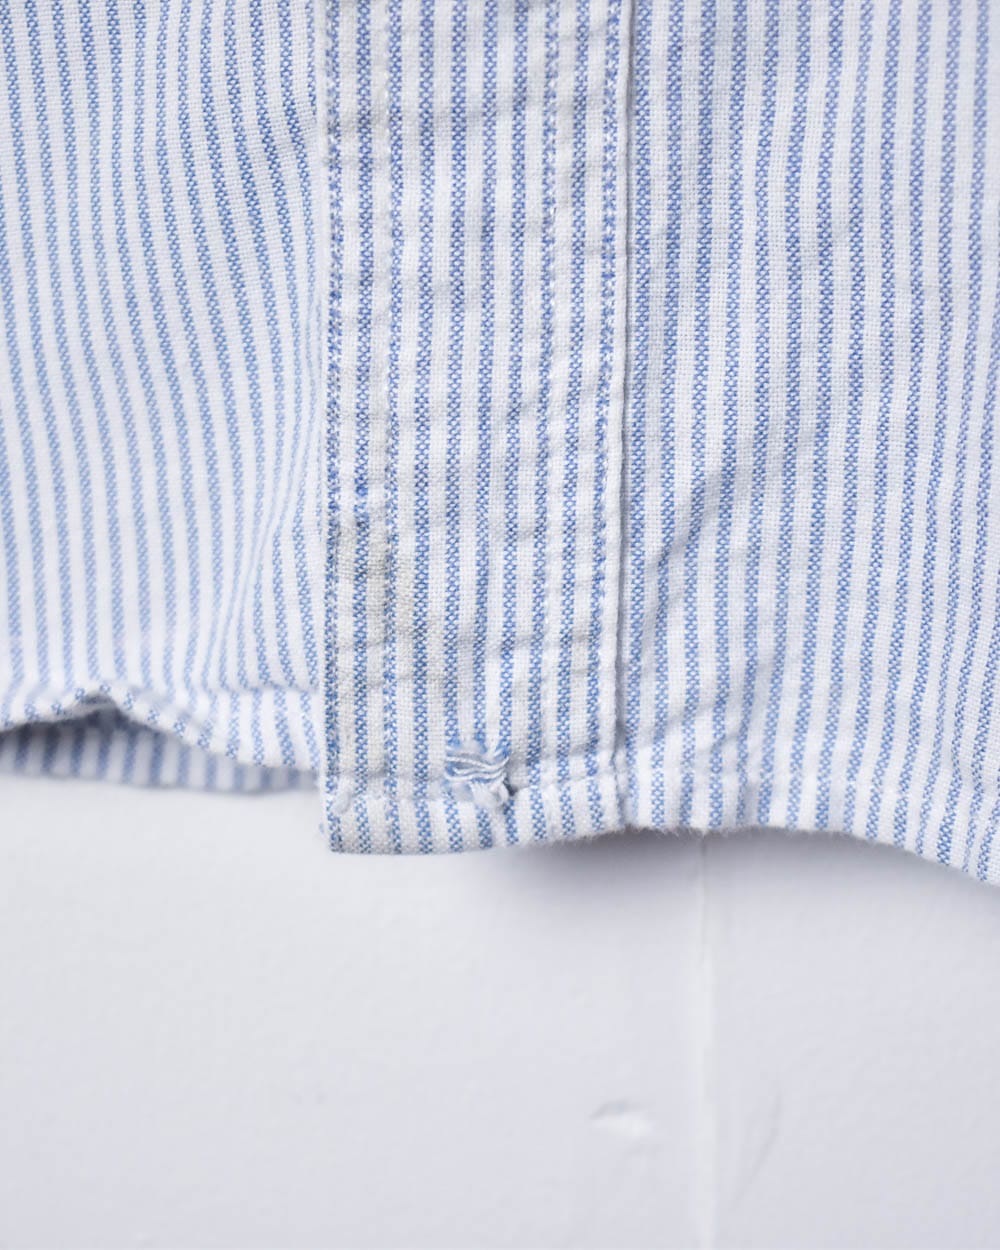 BabyBlue Chaps Ralph Lauren Striped Shirt - Large